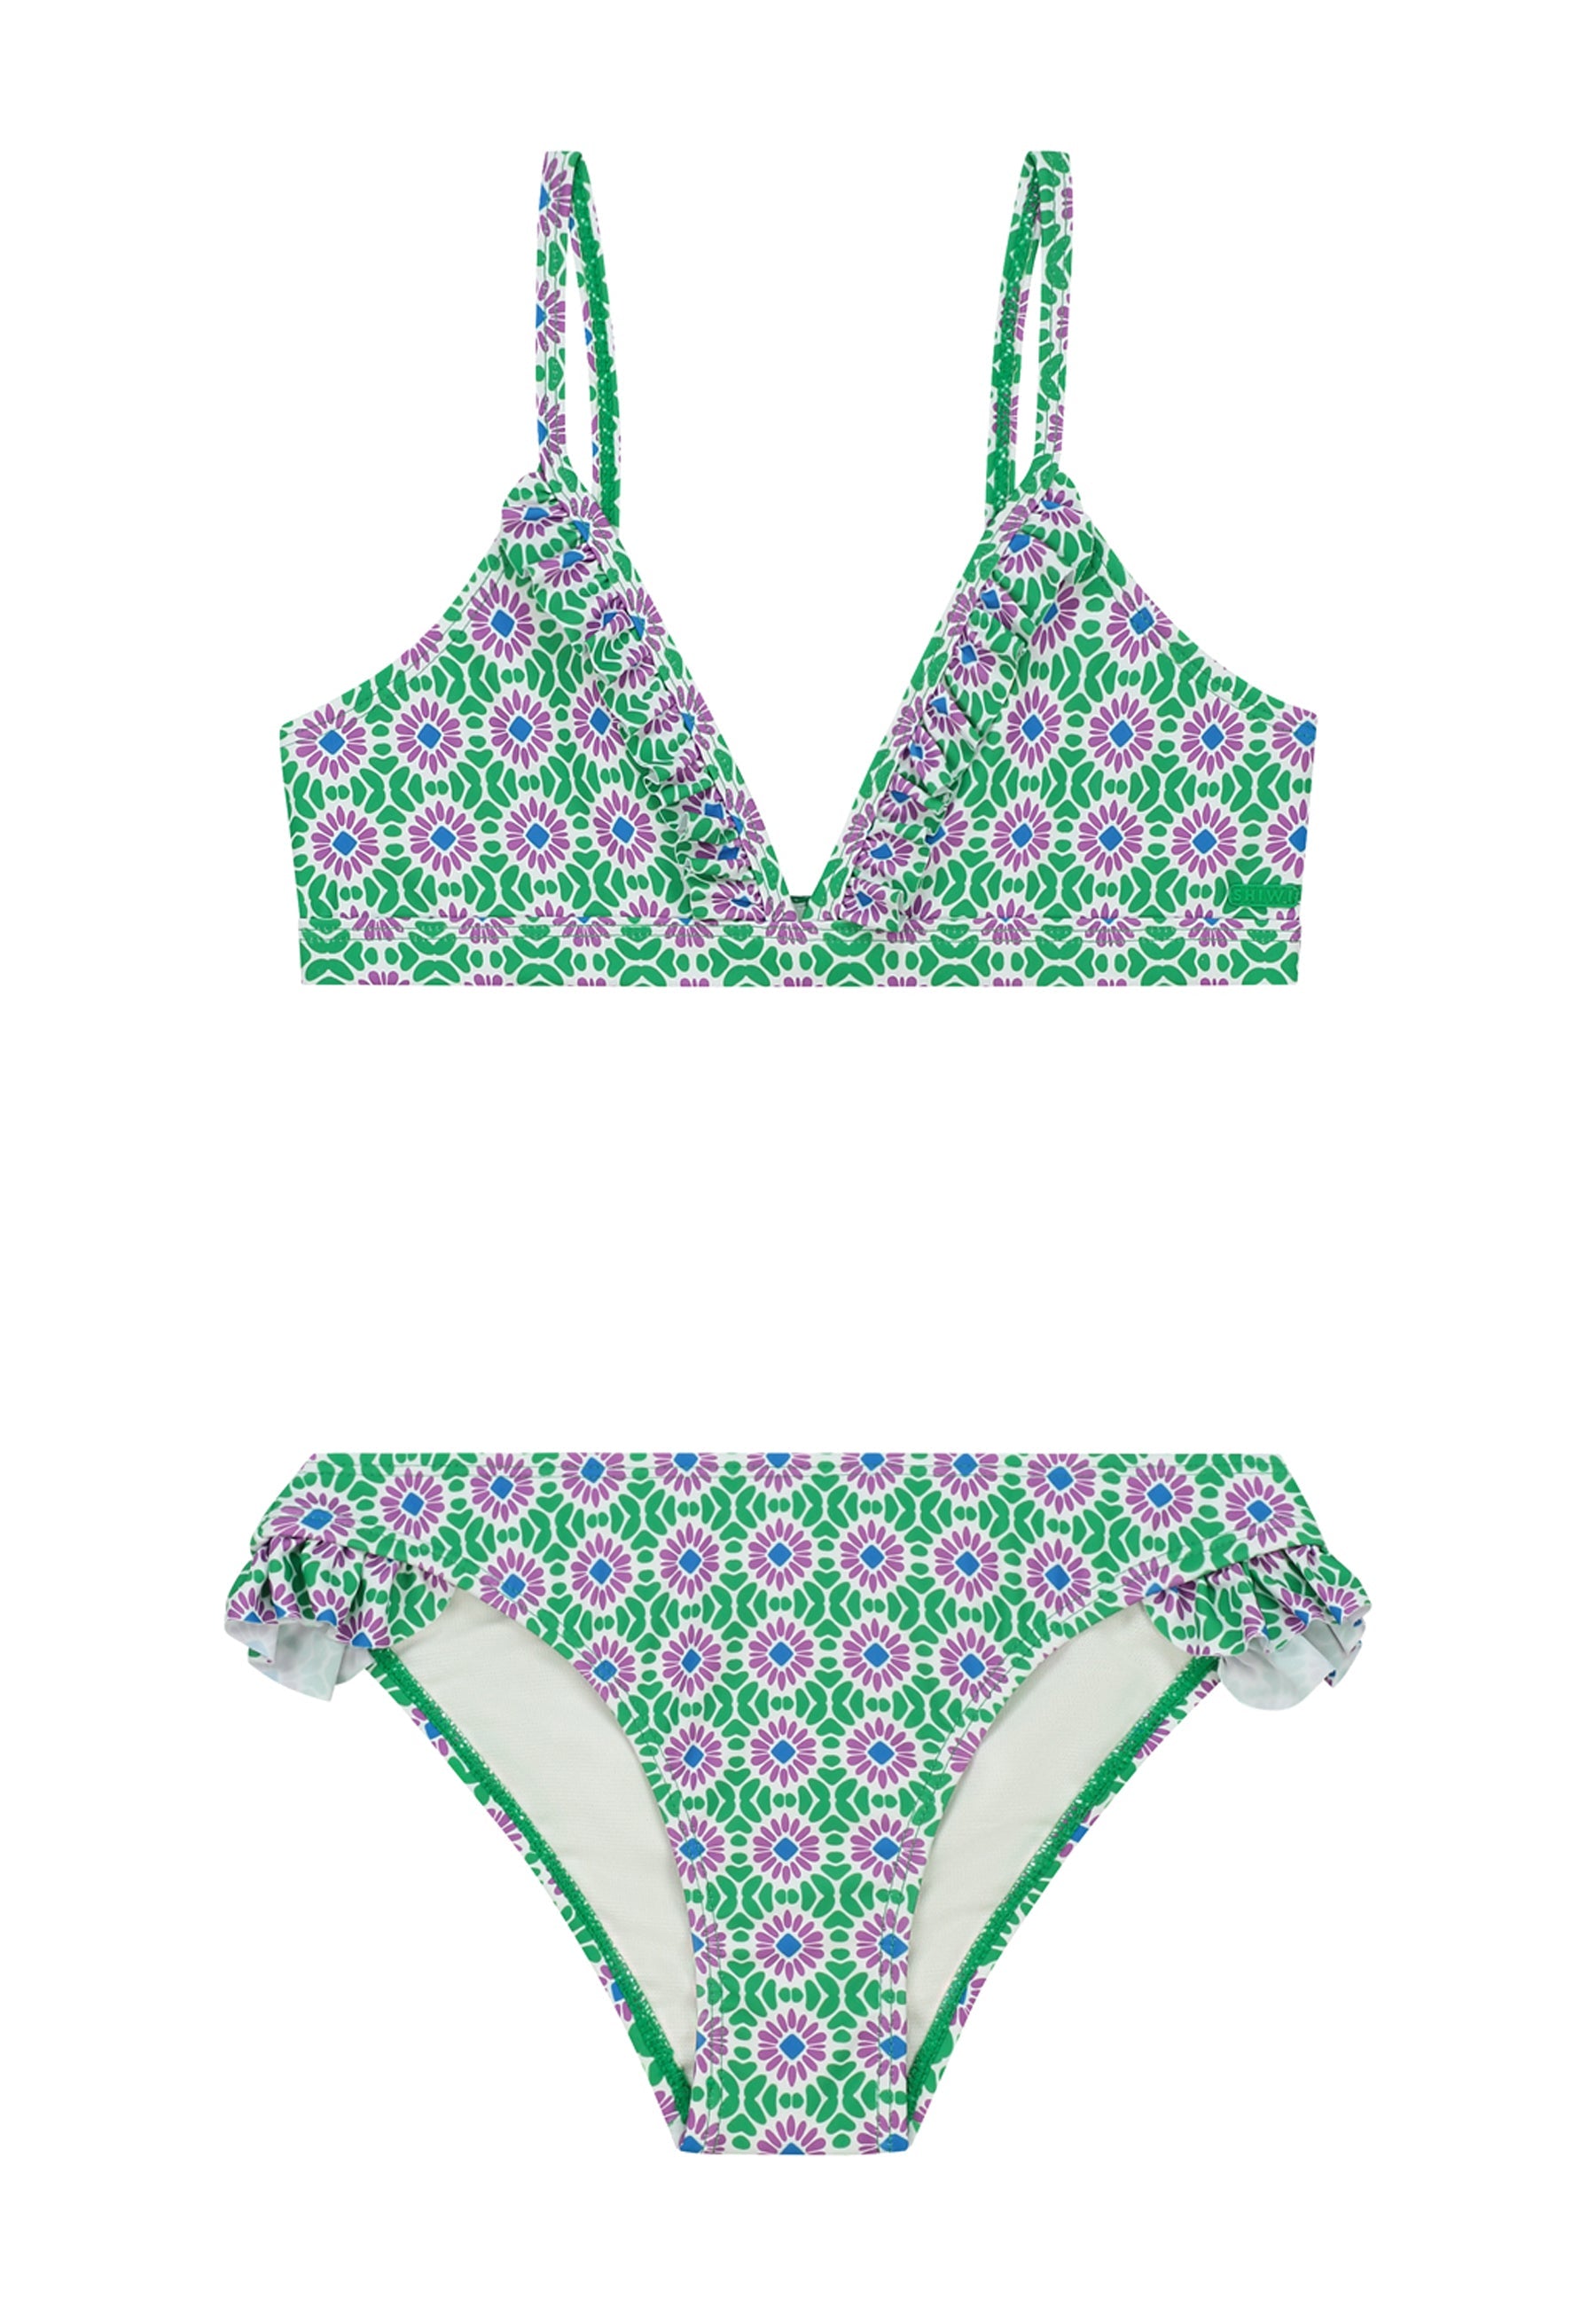 Meisjes BLAKE bikini set porto tile van  in de kleur tropic green tile in maat 158-164.